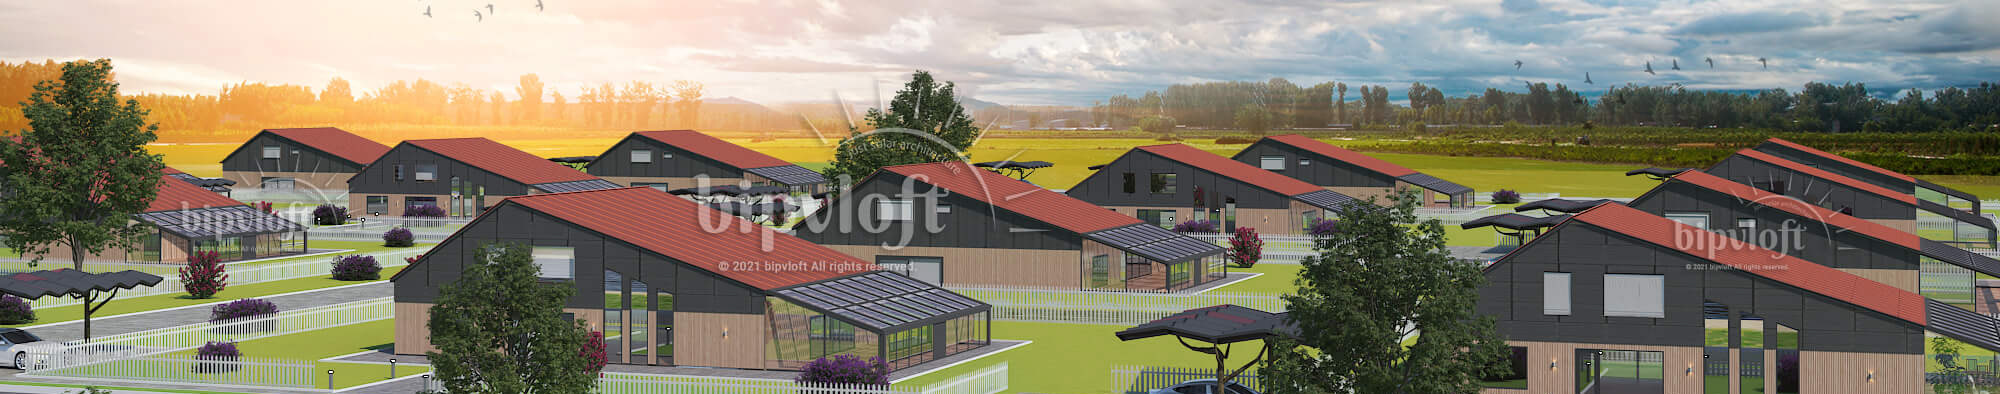 bipvloft 'just solar architecture''s profile banner